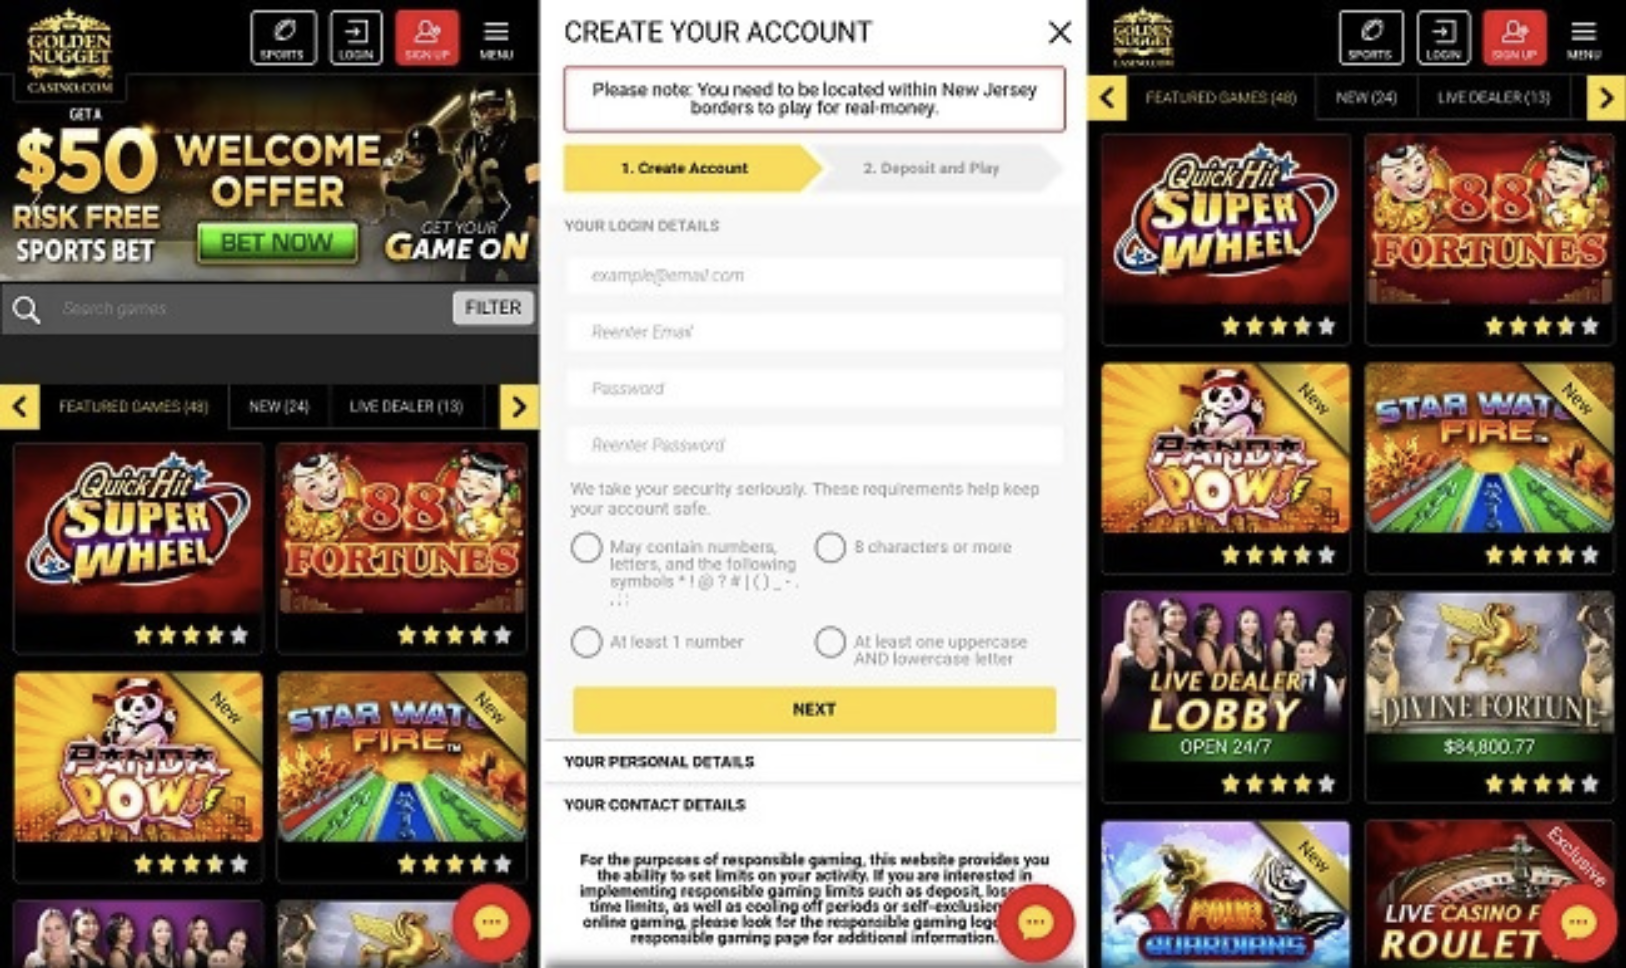 download the new Golden Nugget Casino Online